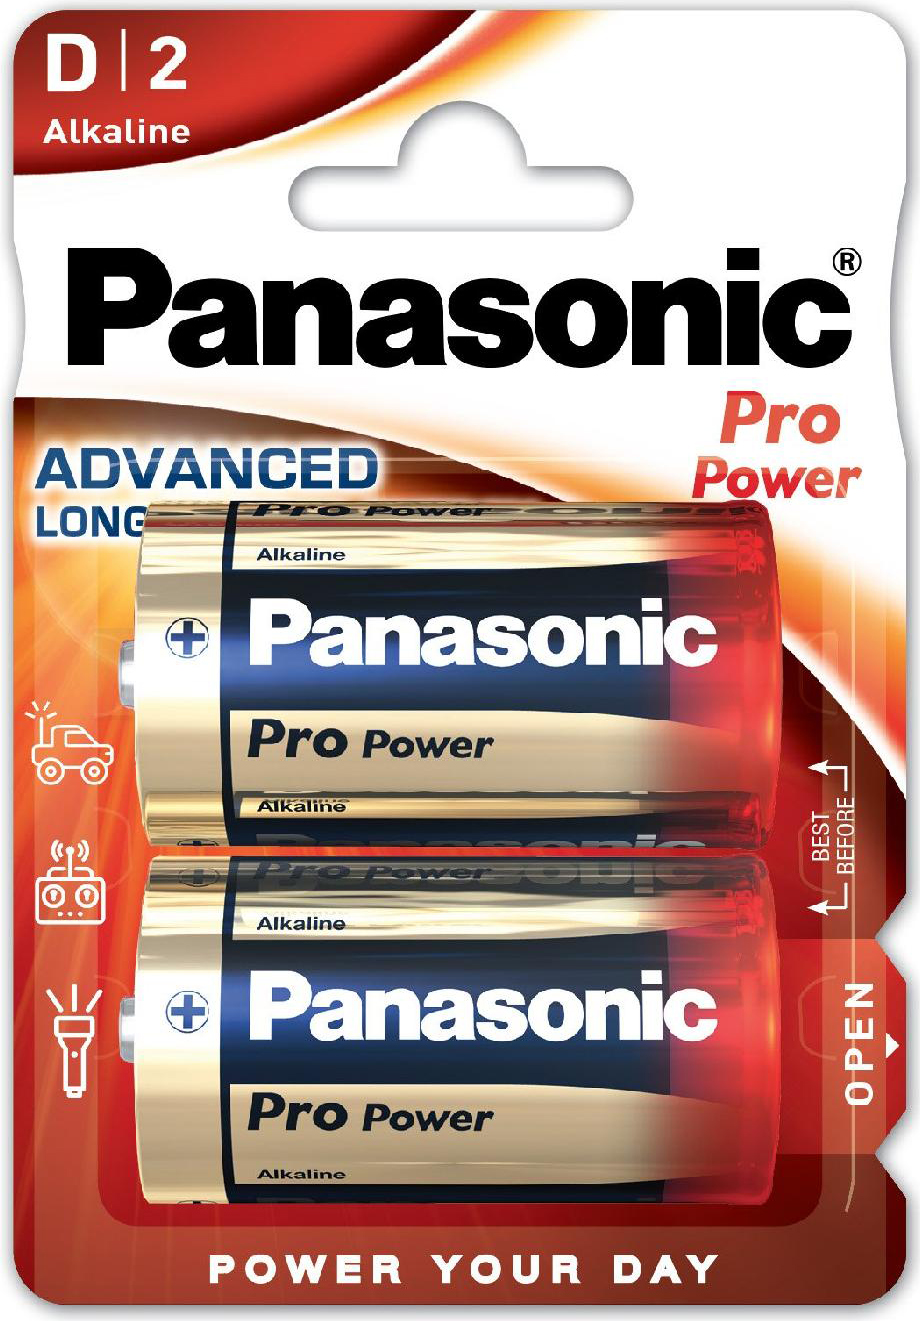 Panasonic C100020 Blister 2 Torce Lr20